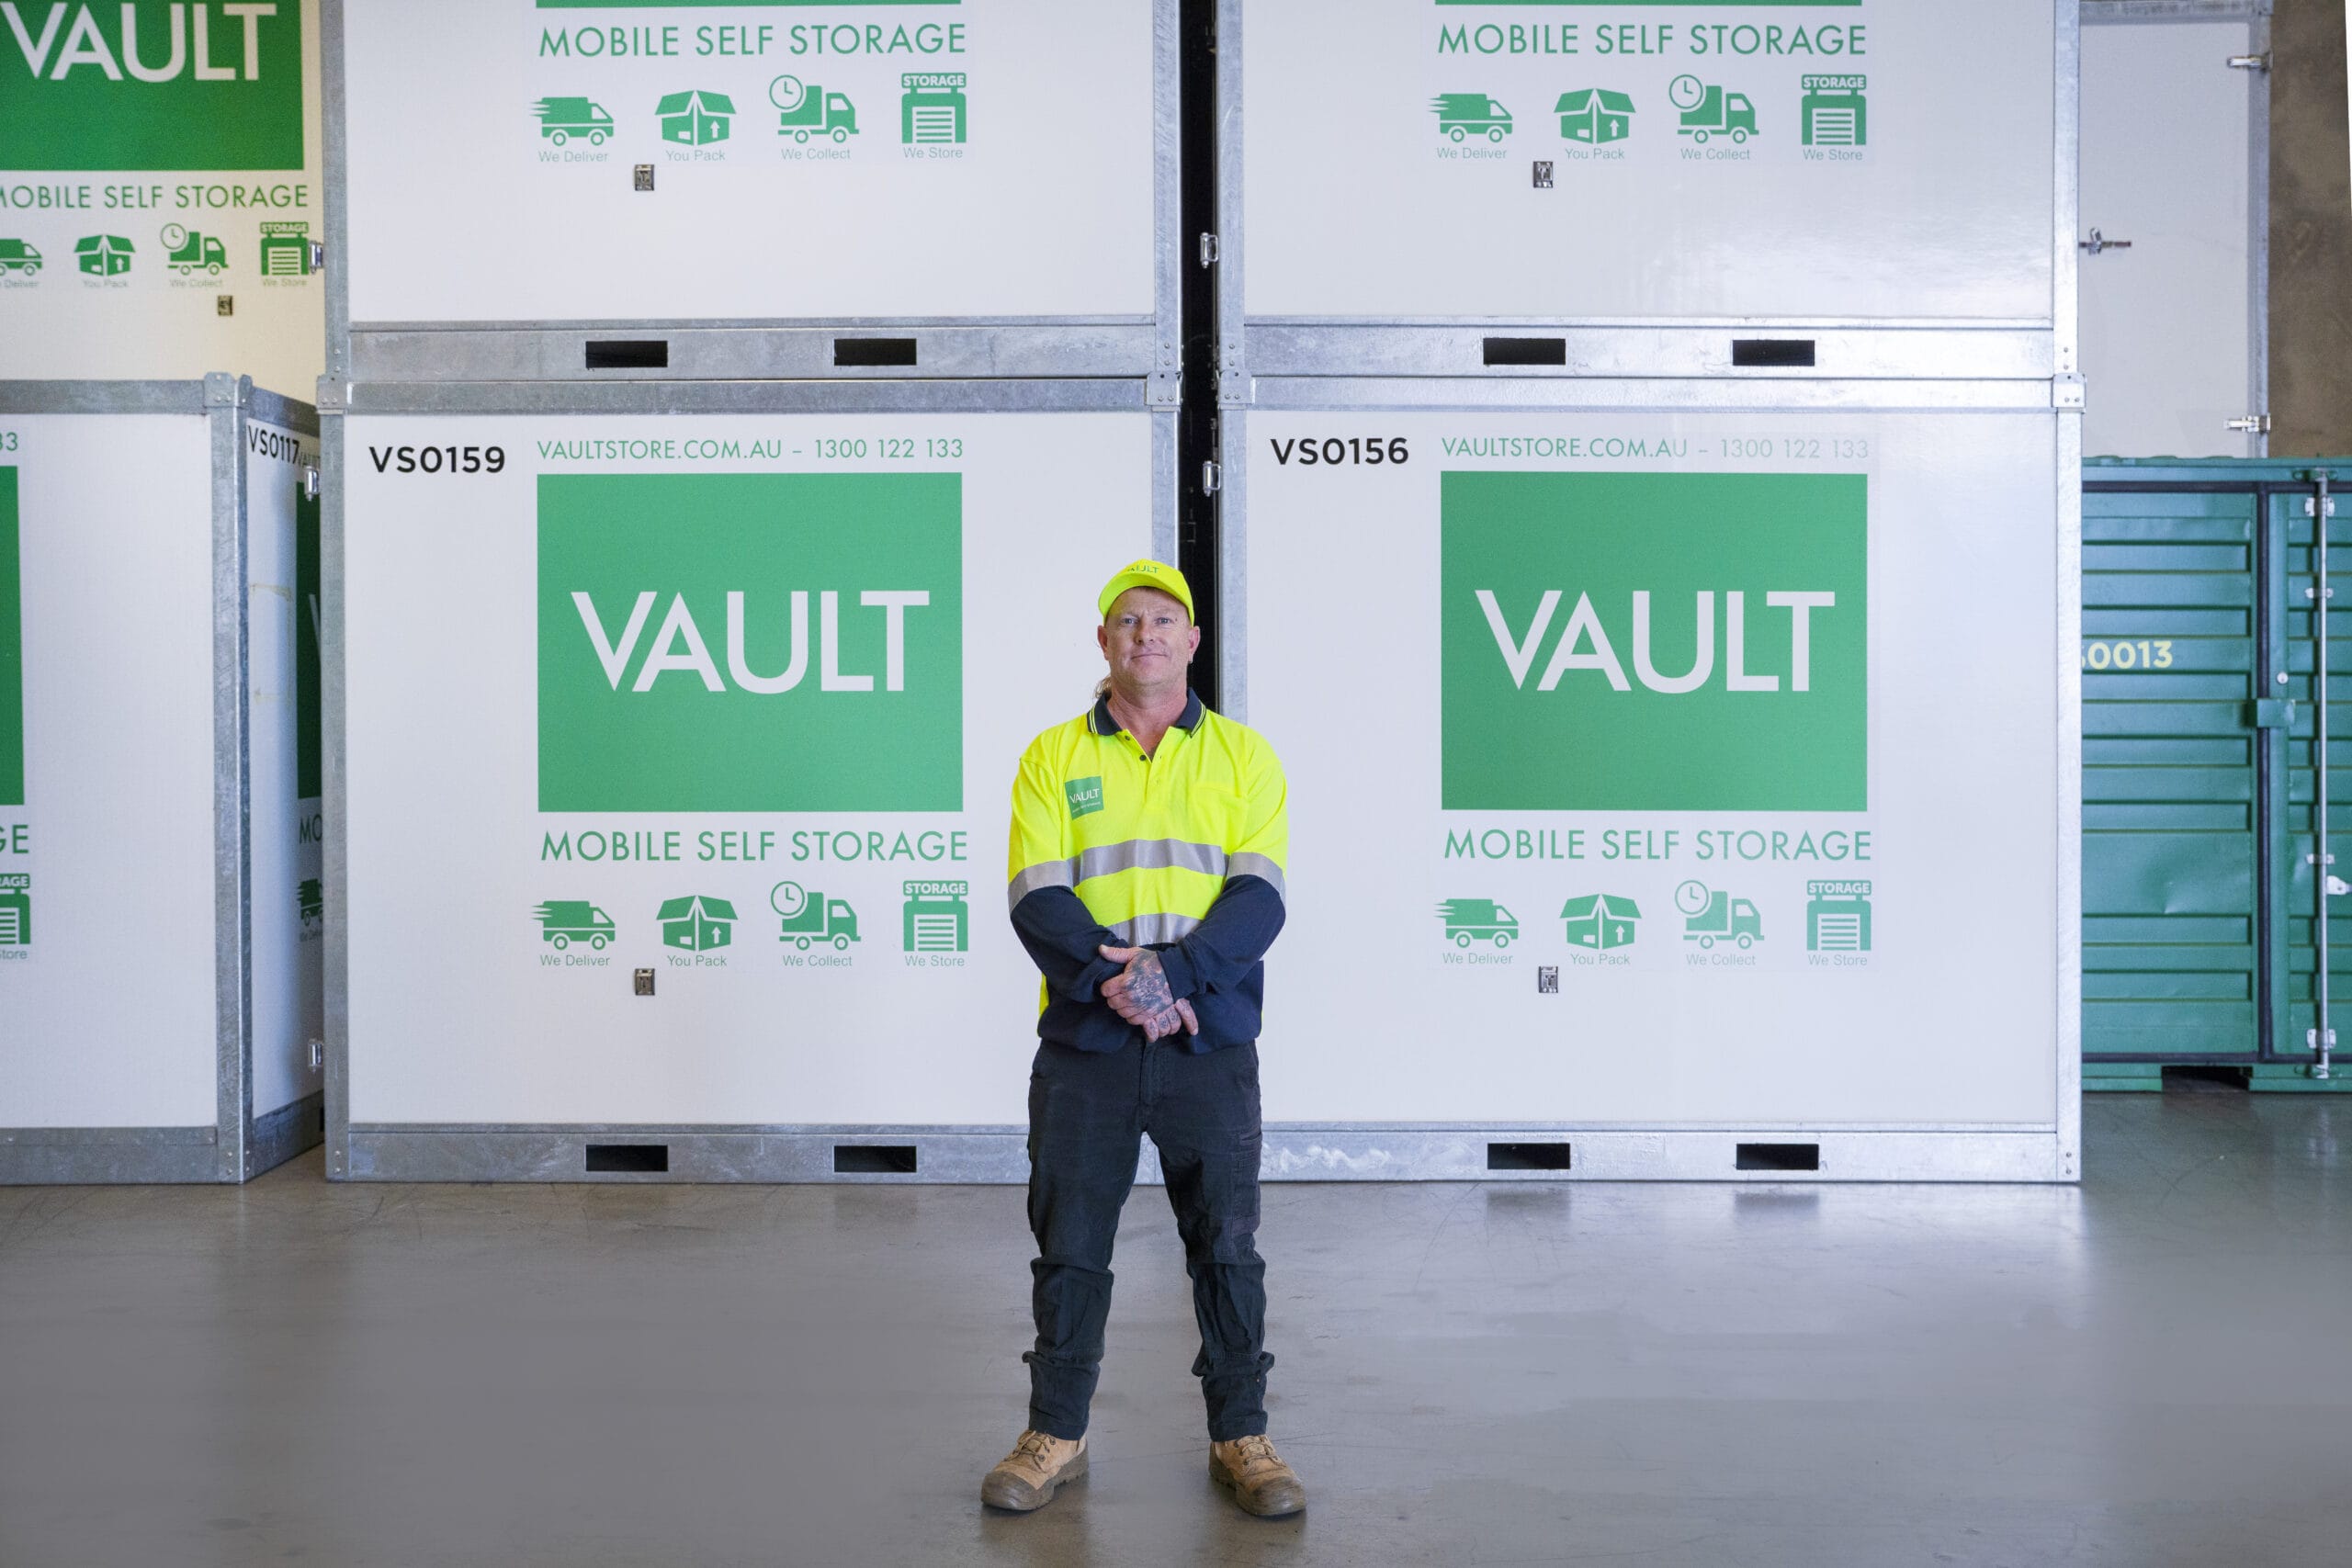 Vault Store employee standing behind Vault Store Mobile Storage